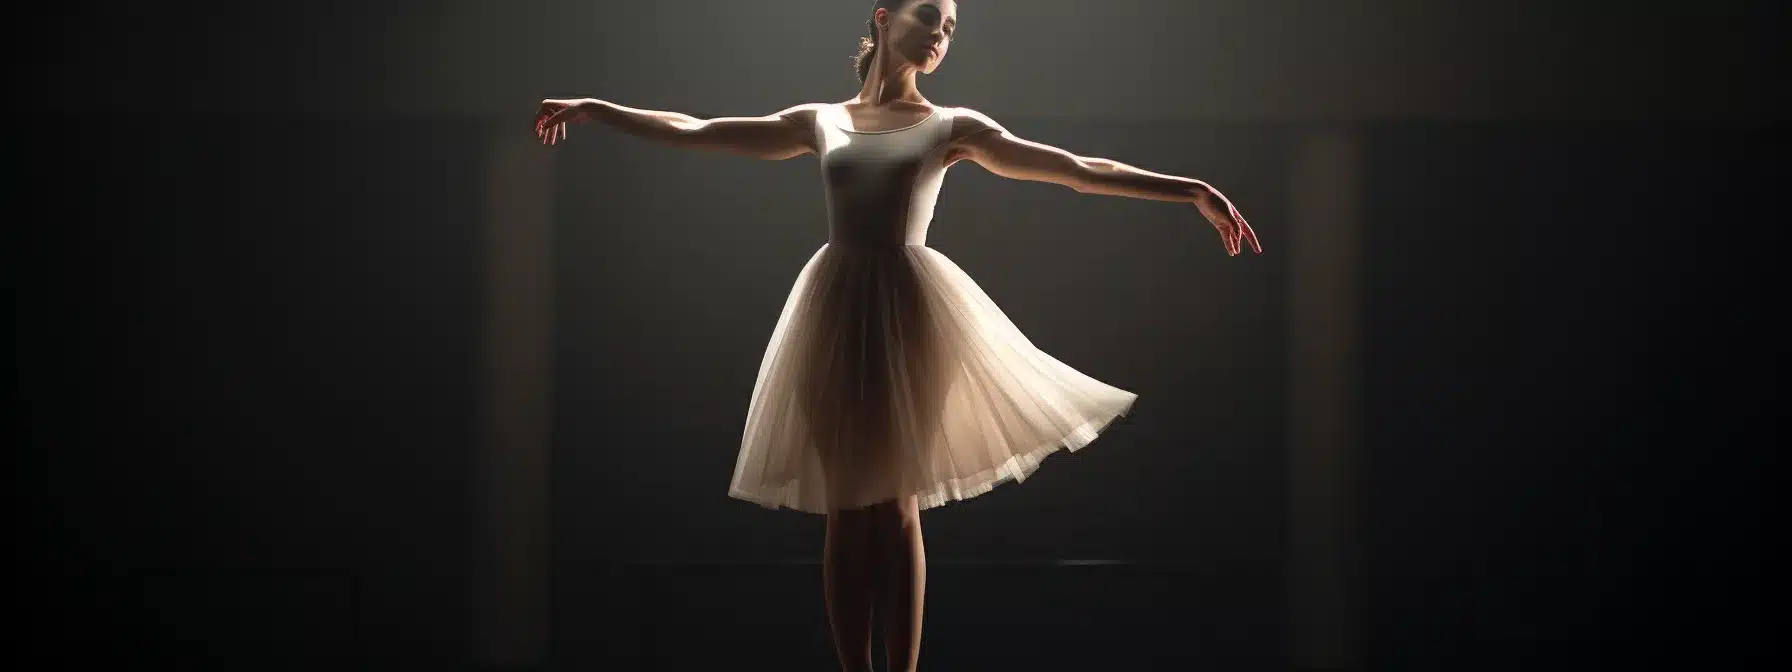 A Ballet Dancer Gracefully Adjusting Their Moves Mid-Performance.